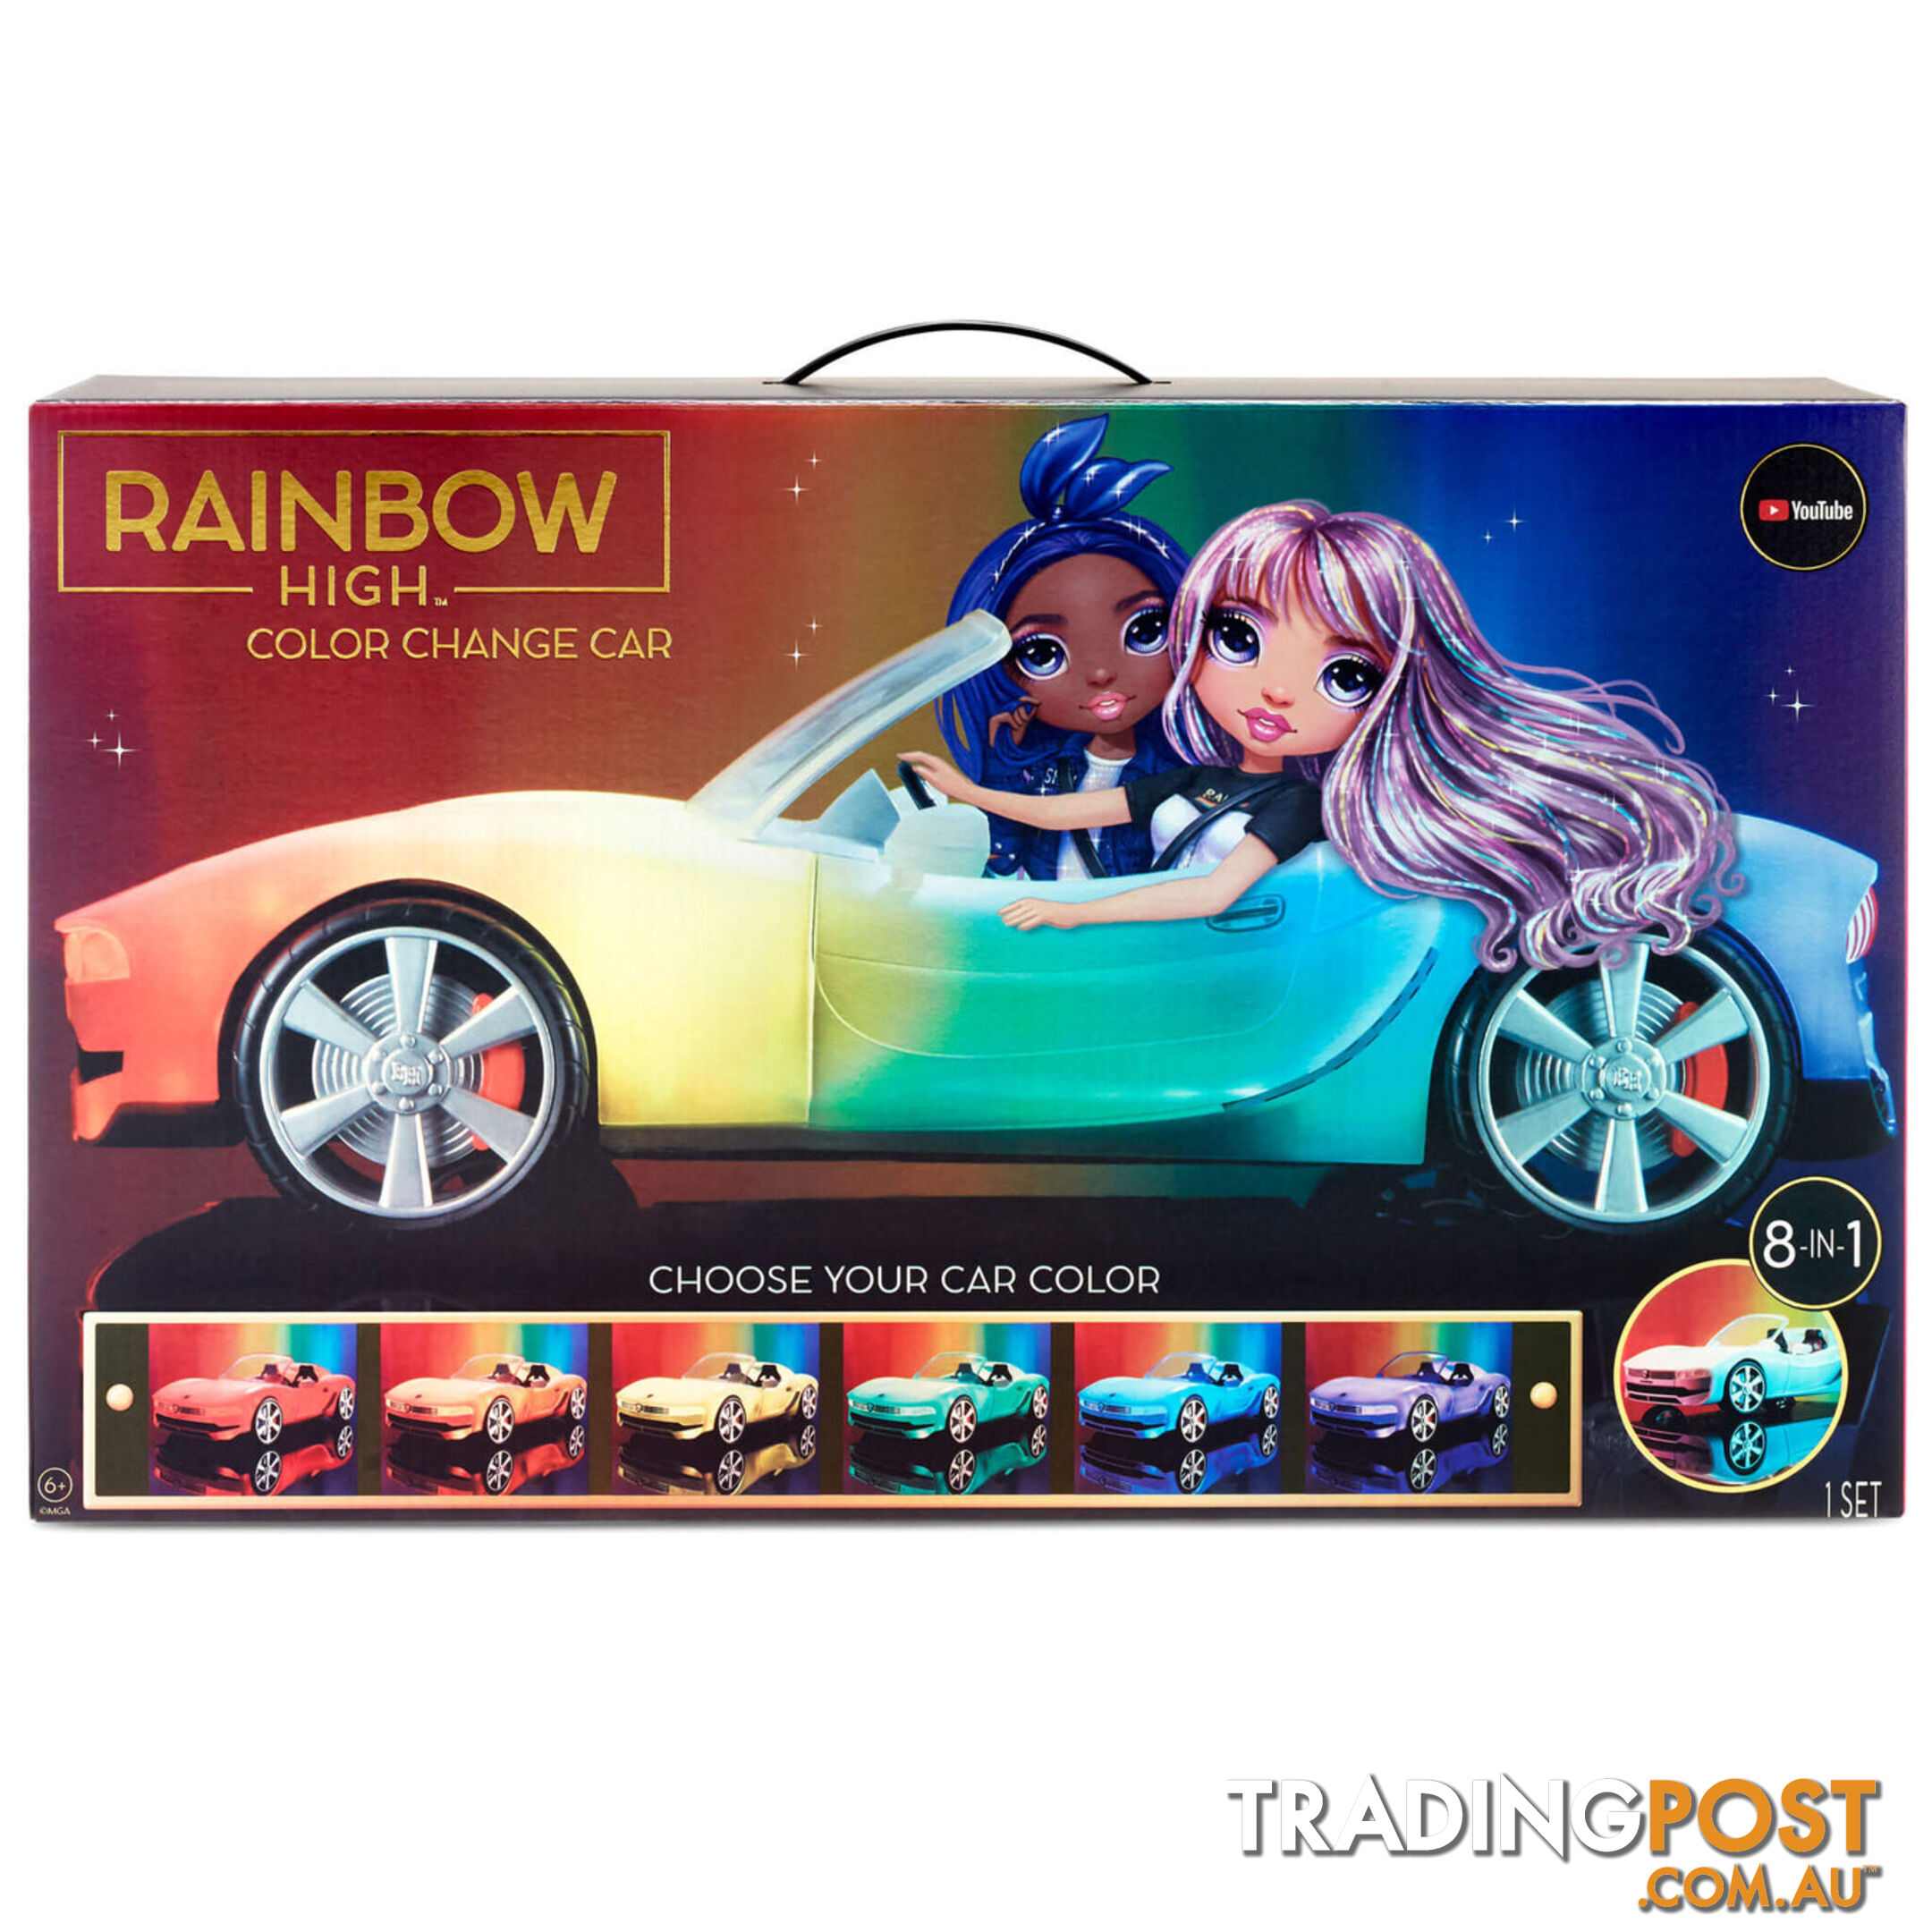 Rainbow High - Convertible Color Change Car - Bj574316 - 035051574316